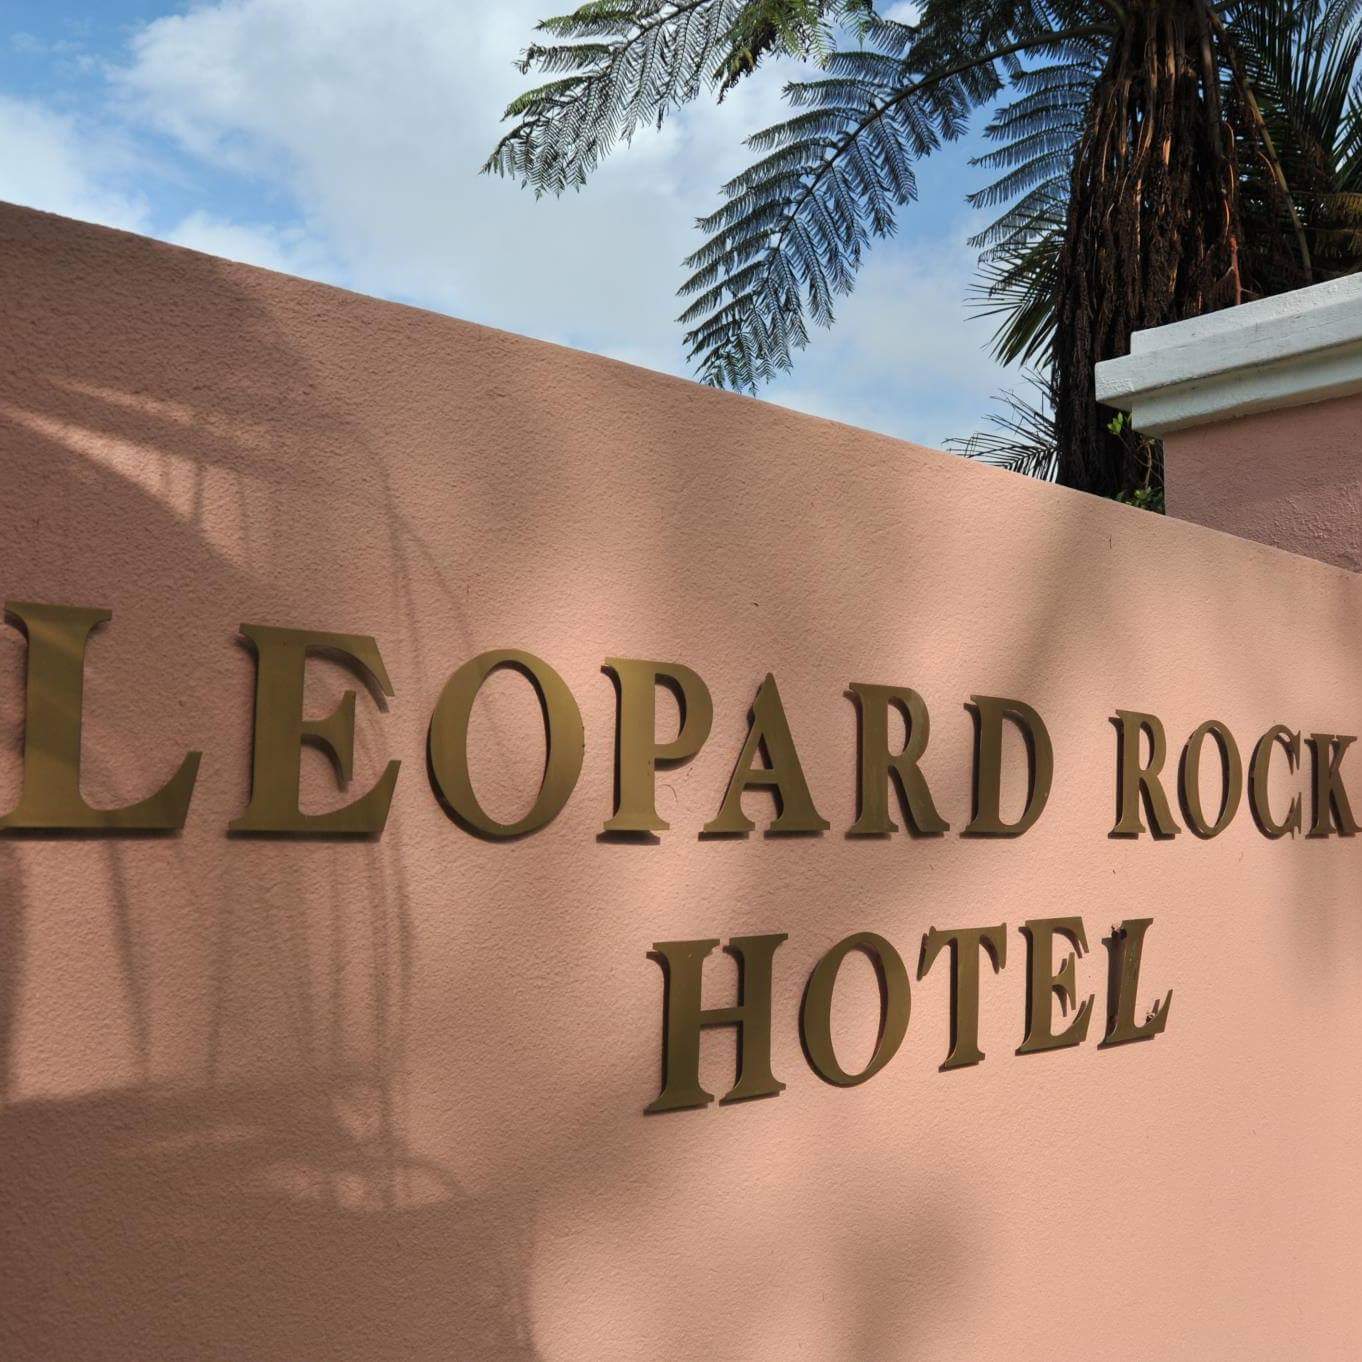 Hotel Names And Shames Schweppes Zimbabwe On Social Media photo